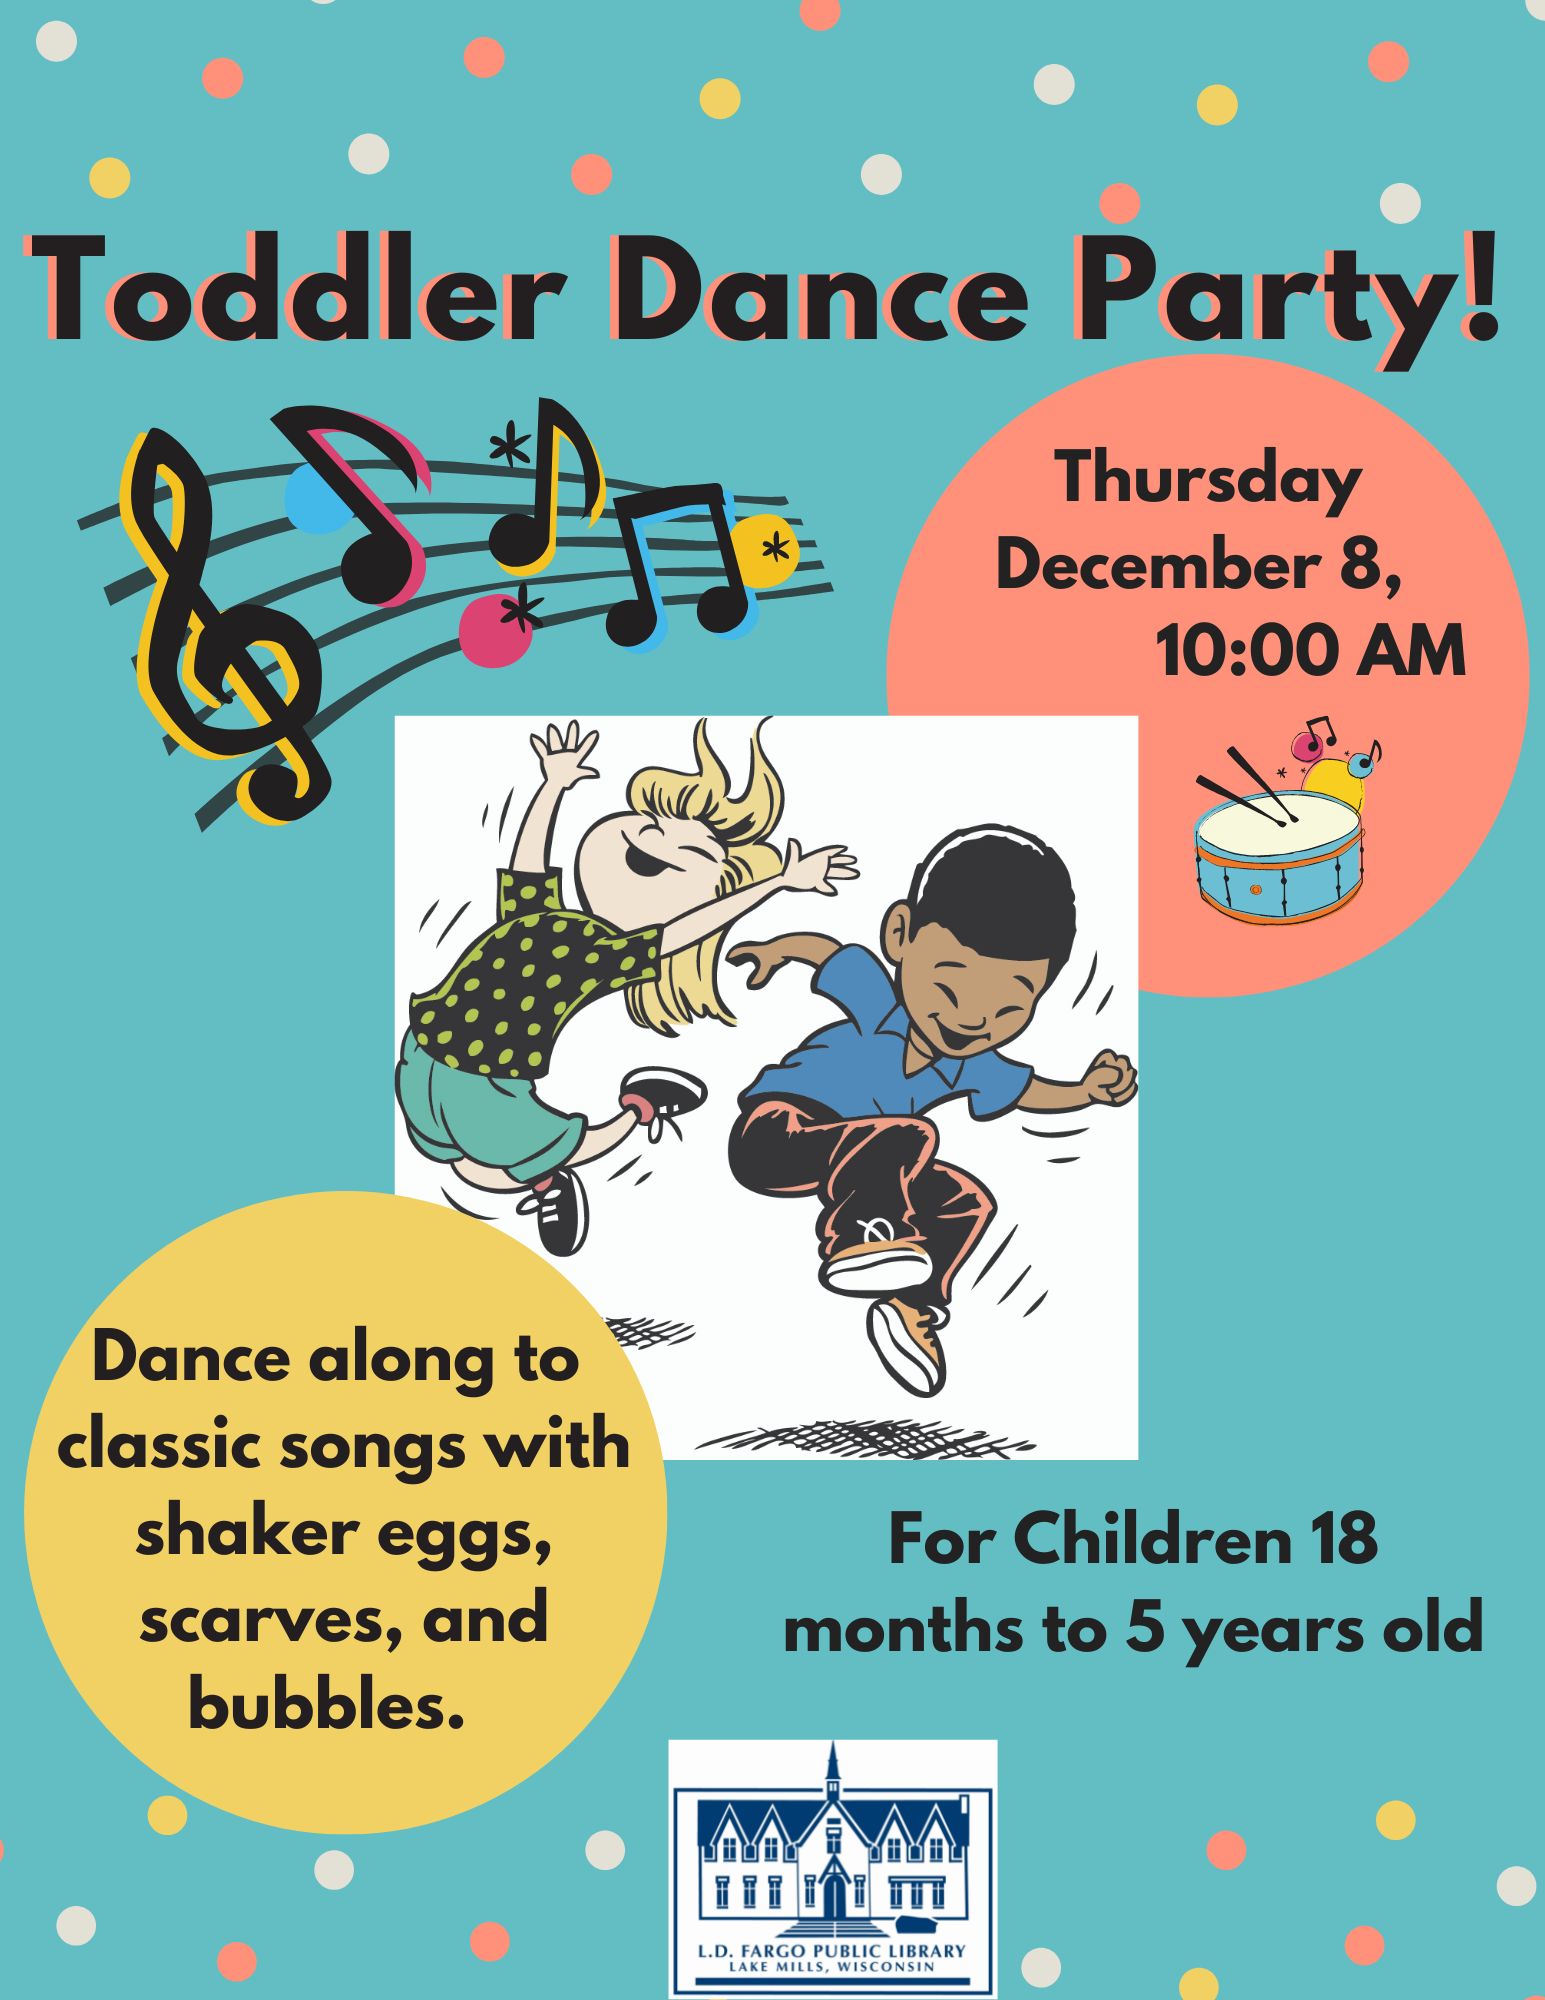 Toddler Dance Party.  Thursday December 8, 10:00 AM.